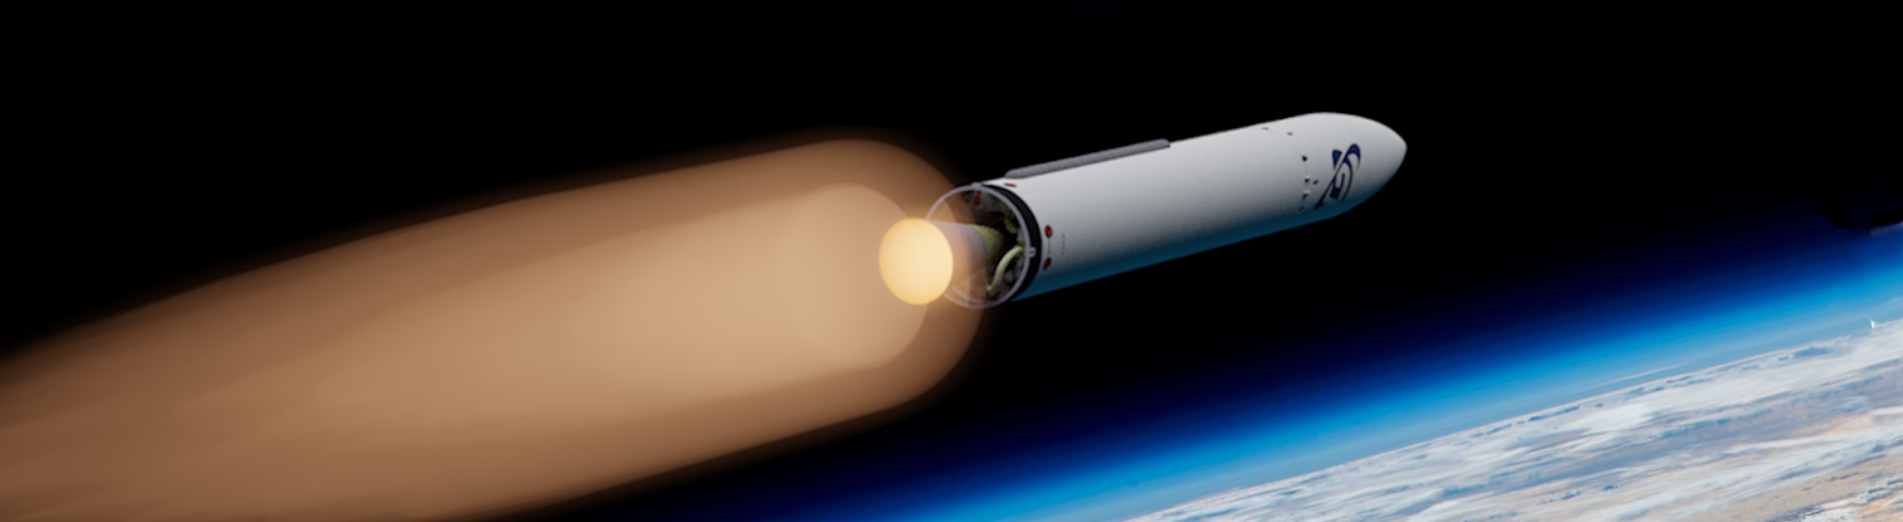 Gilmour space rocket in flight